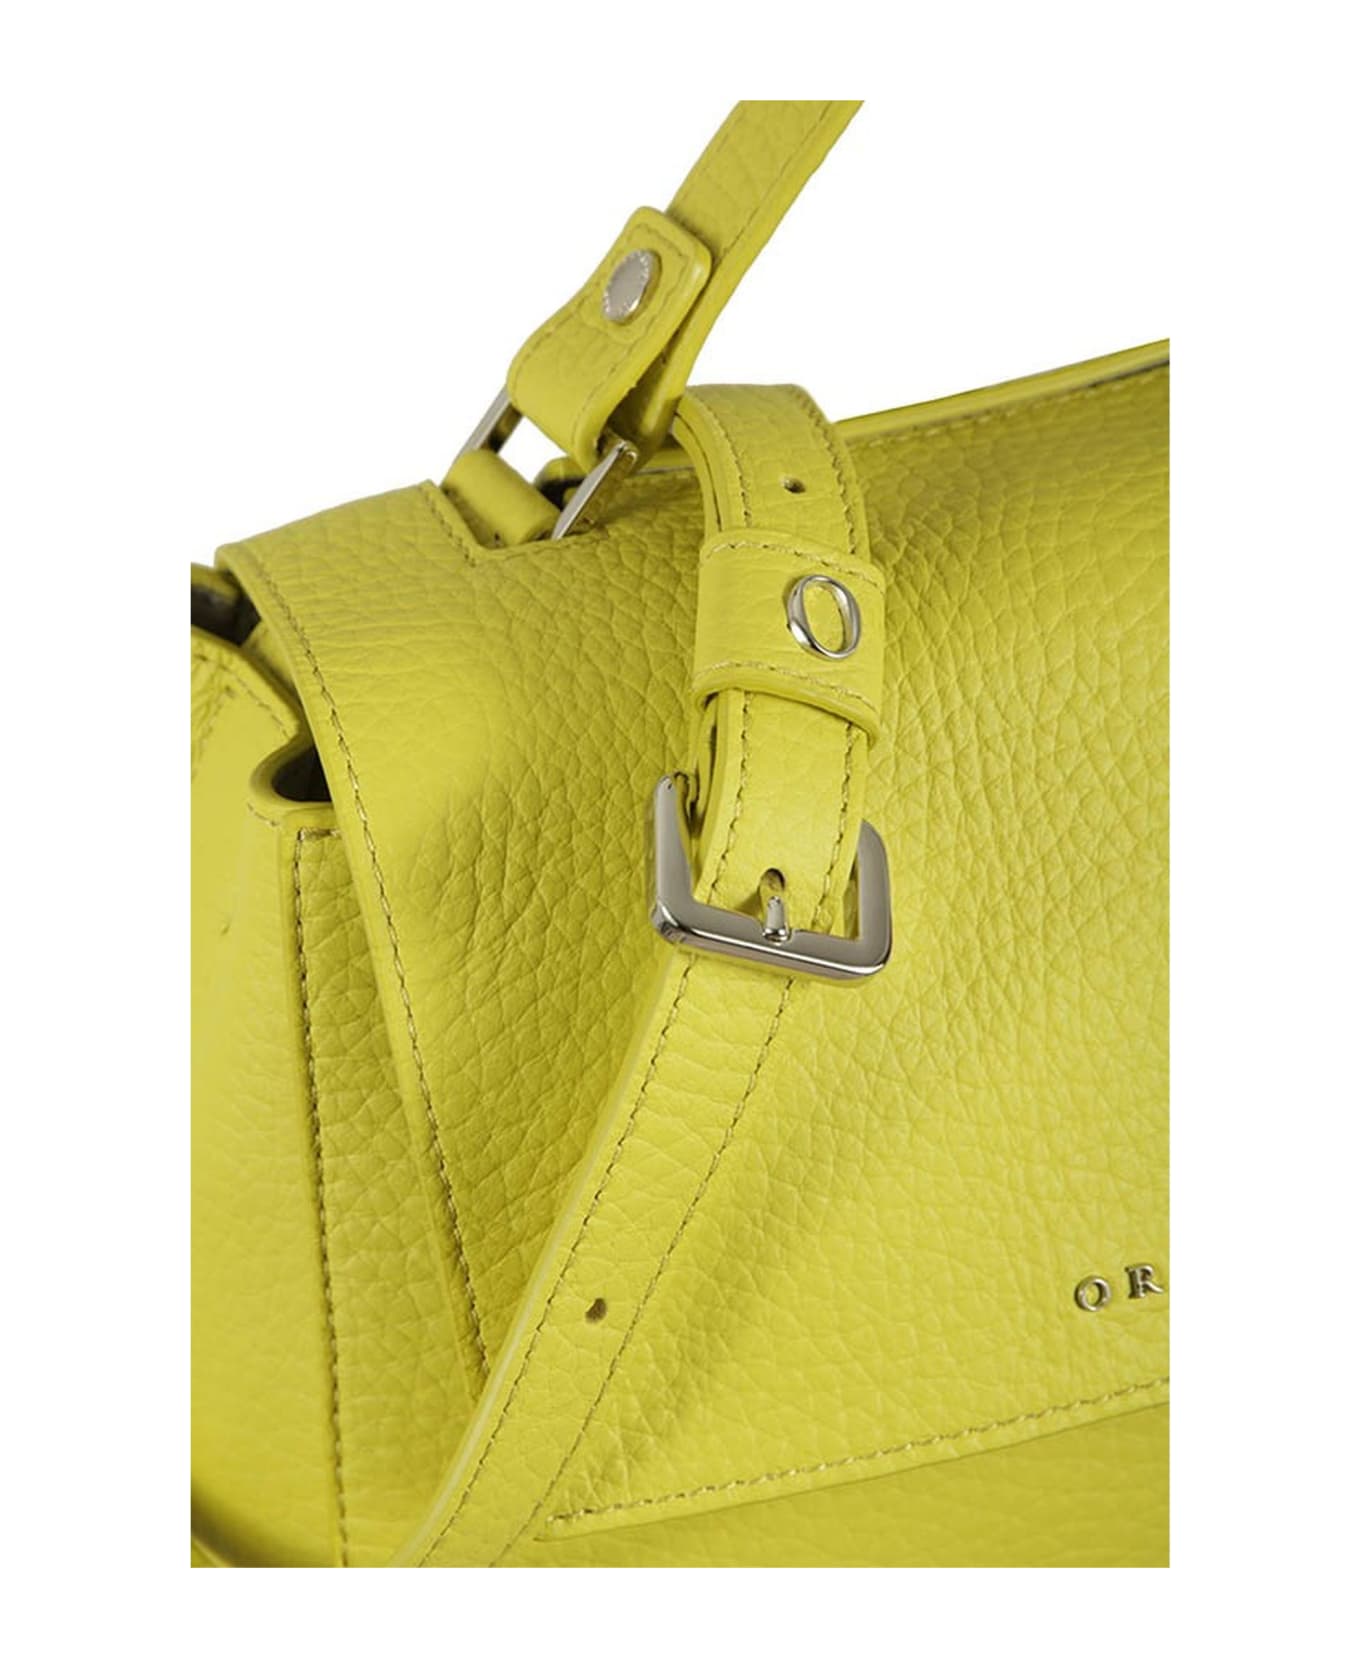 Orciani Sveva Soft Small Leather Handbag - Yellow